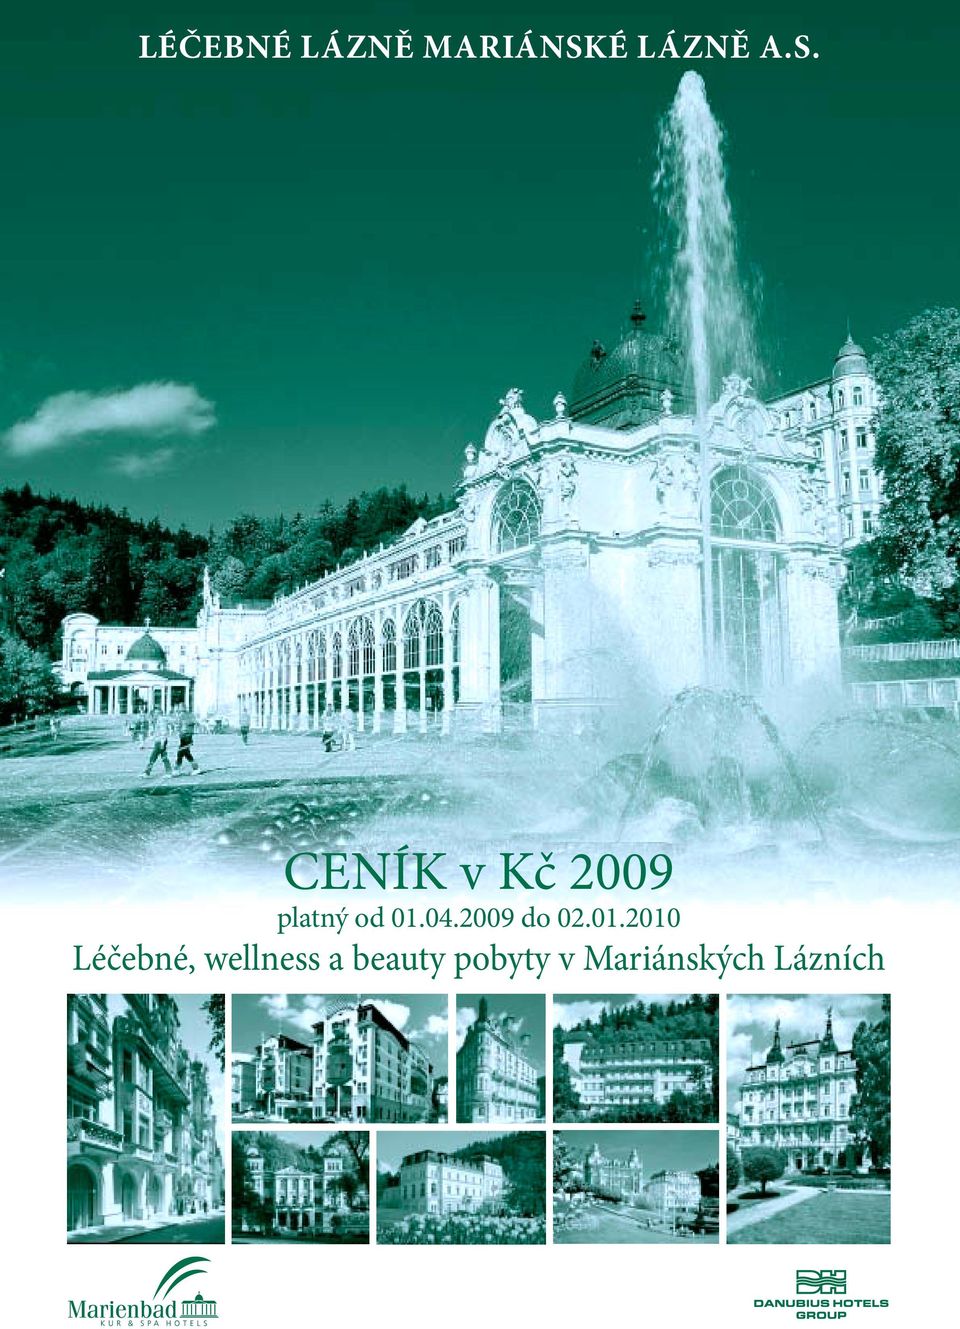 CENÍK v Kč 2009 platný od 01.04.